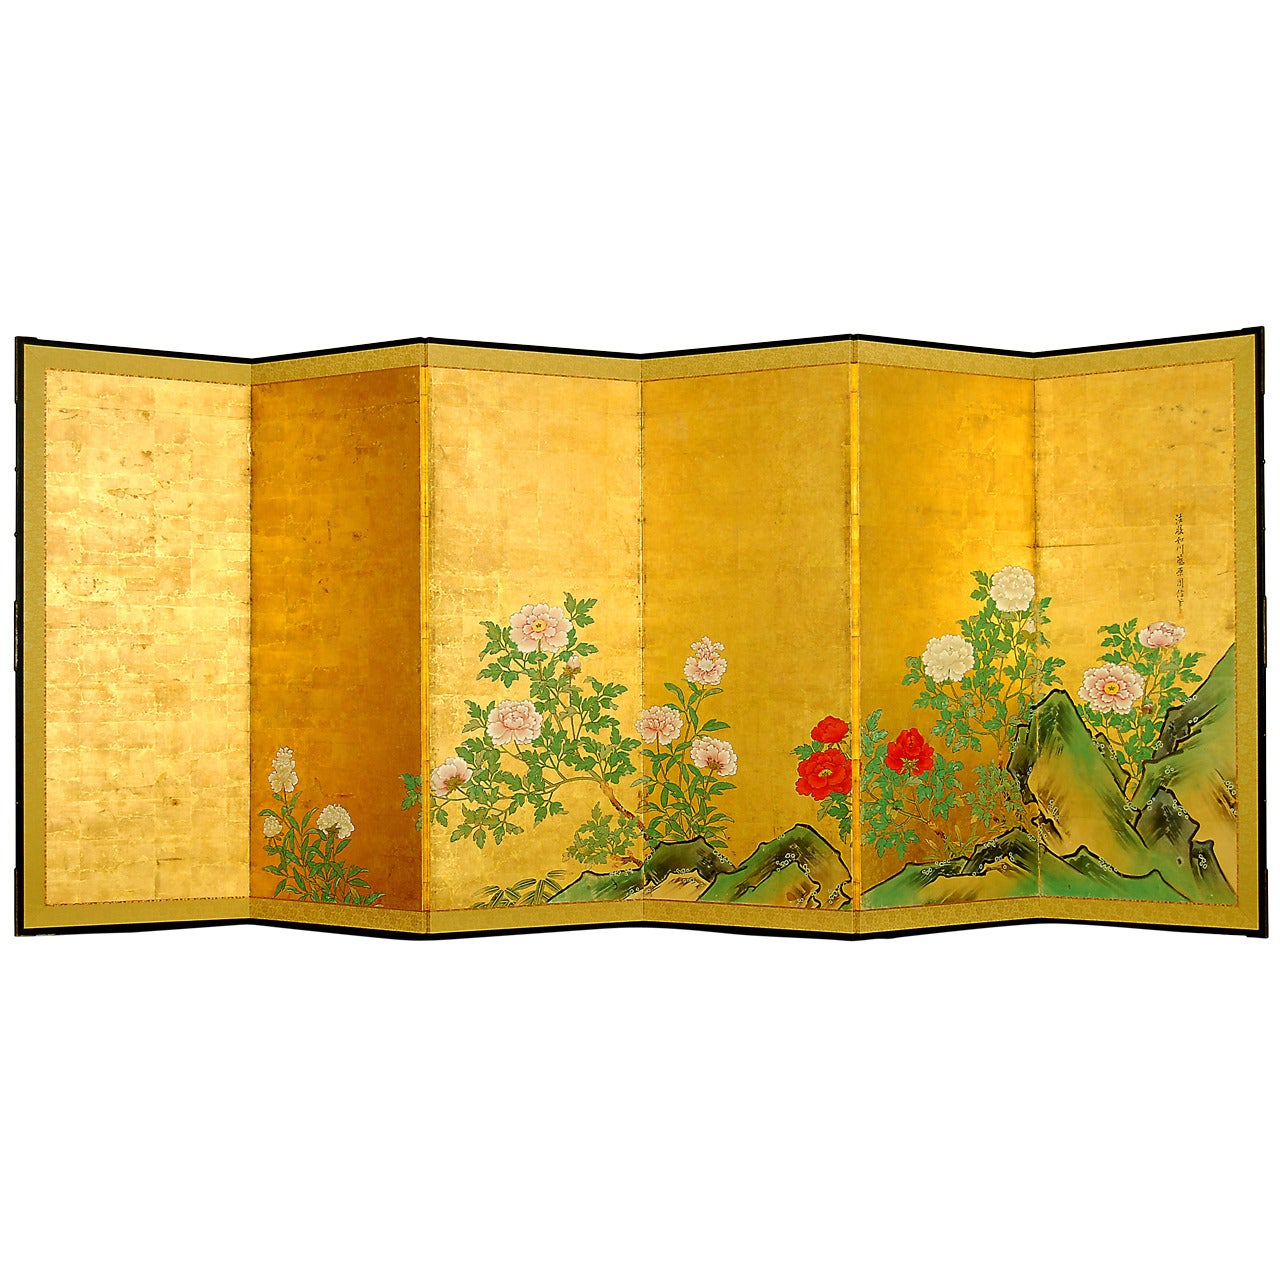 Antique Japanese Six-Panel Screen by Kano Chikanobu "Shushin" For Sale